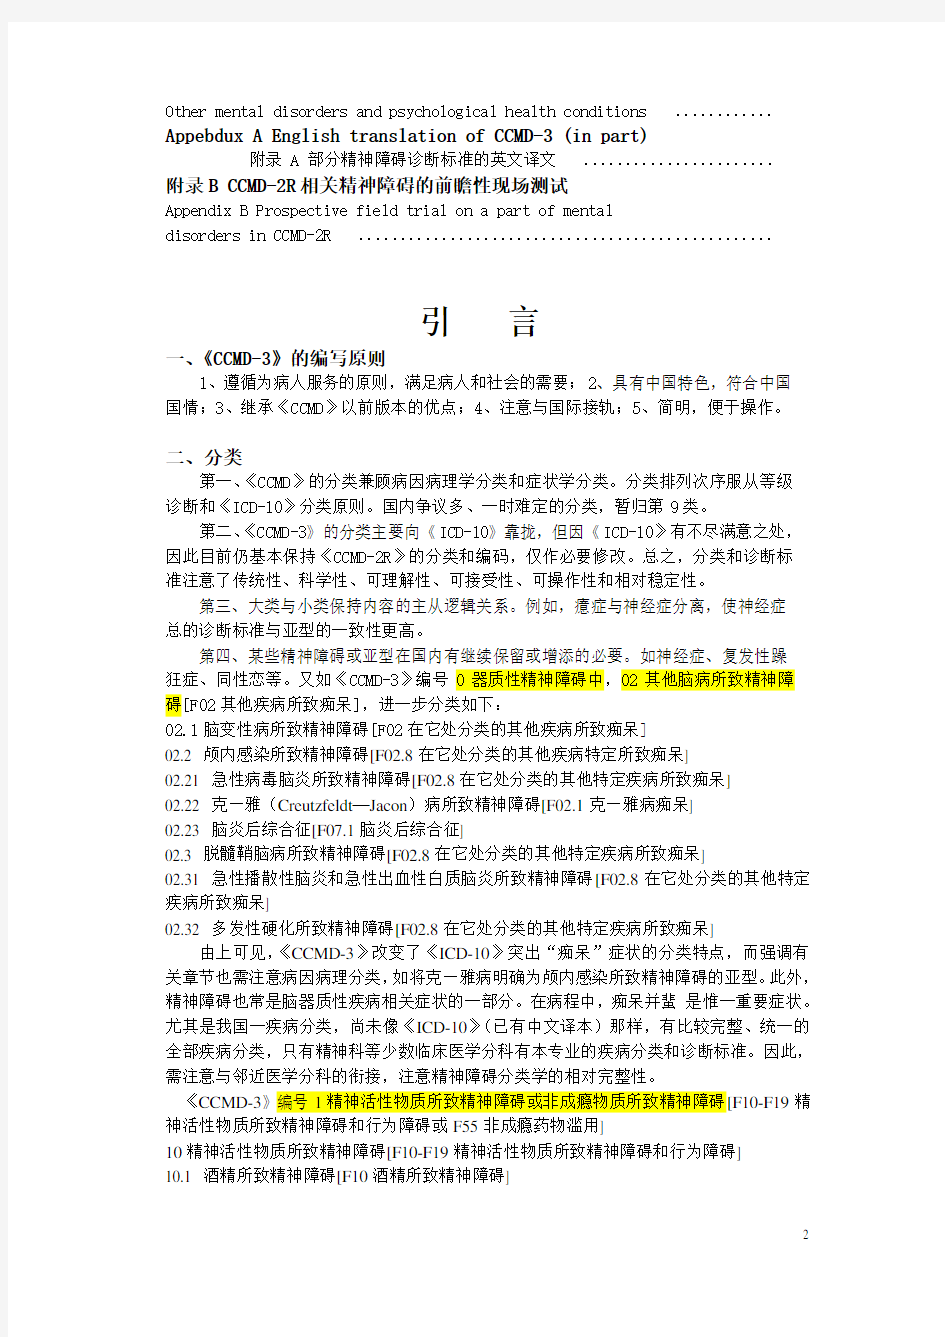 CCMD-3中国精神障碍分类与诊断标准第3版